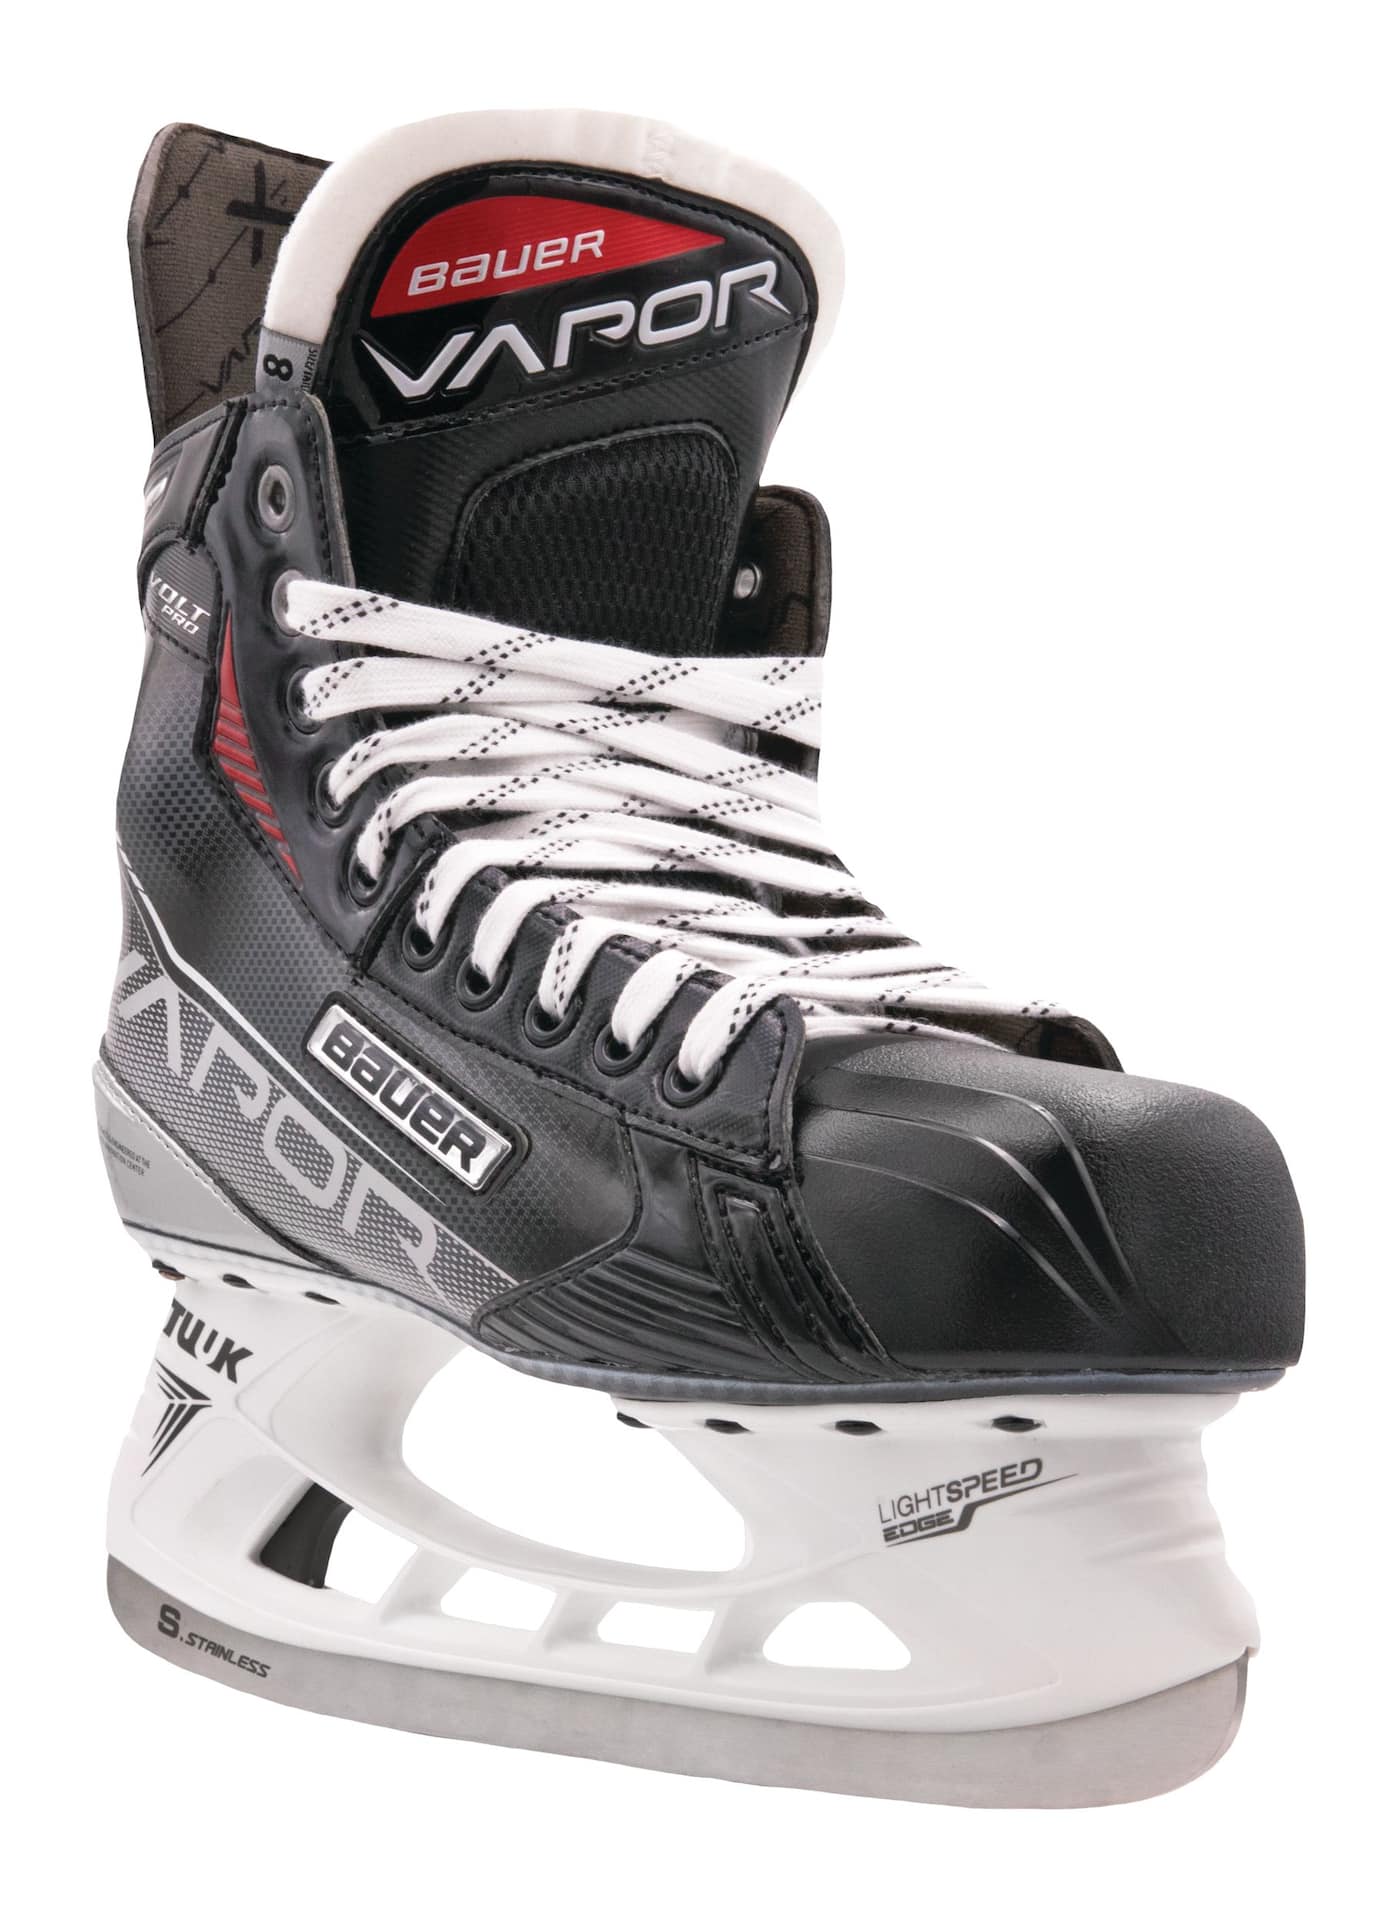 Bauer Vapor Volt Pro Hockey Skates, Senior, Assorted Sizes